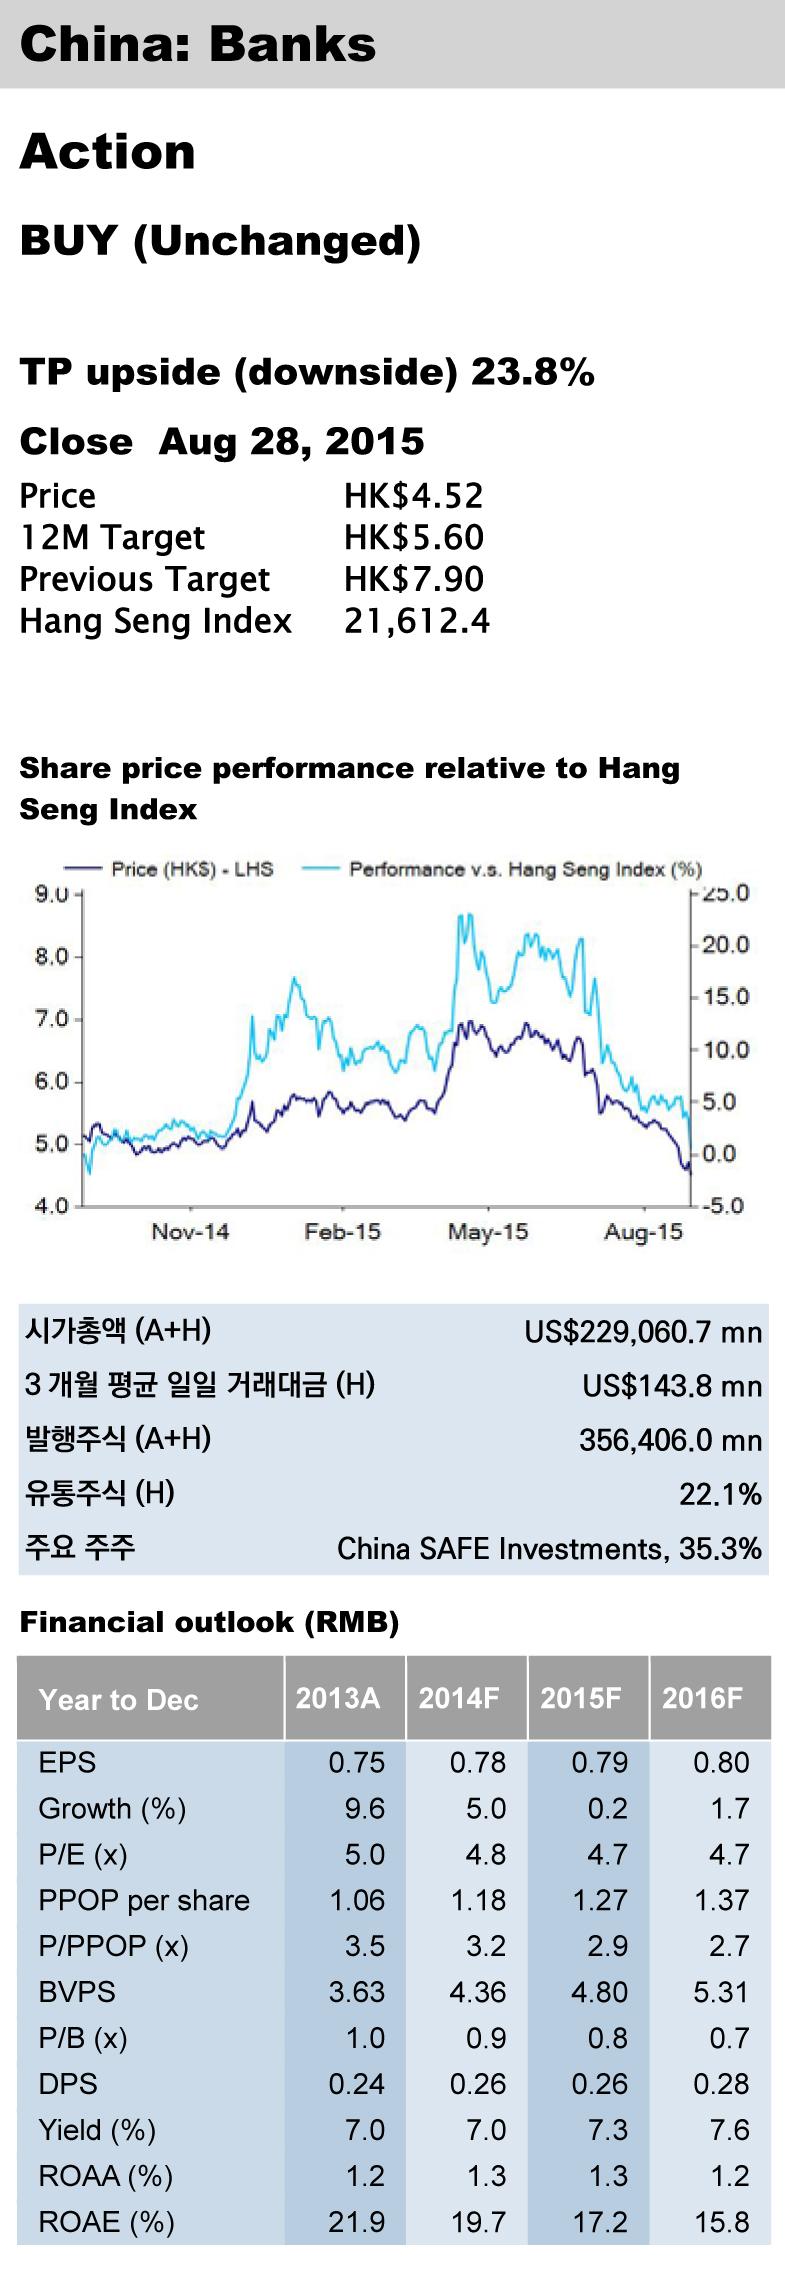 Analyst: Peter Chu CFA (홍콩) +852 3969 9521 / peter.kk.chu@yuanta.com 중국 기업 분석 공상은행 (01398 HK) 대출 건전성 유지를 위한 충당금 상향 투자 의견 유지, 목표 주가 HK$5.6으로 하향: 1H15 순이익은 전년대 비 0.